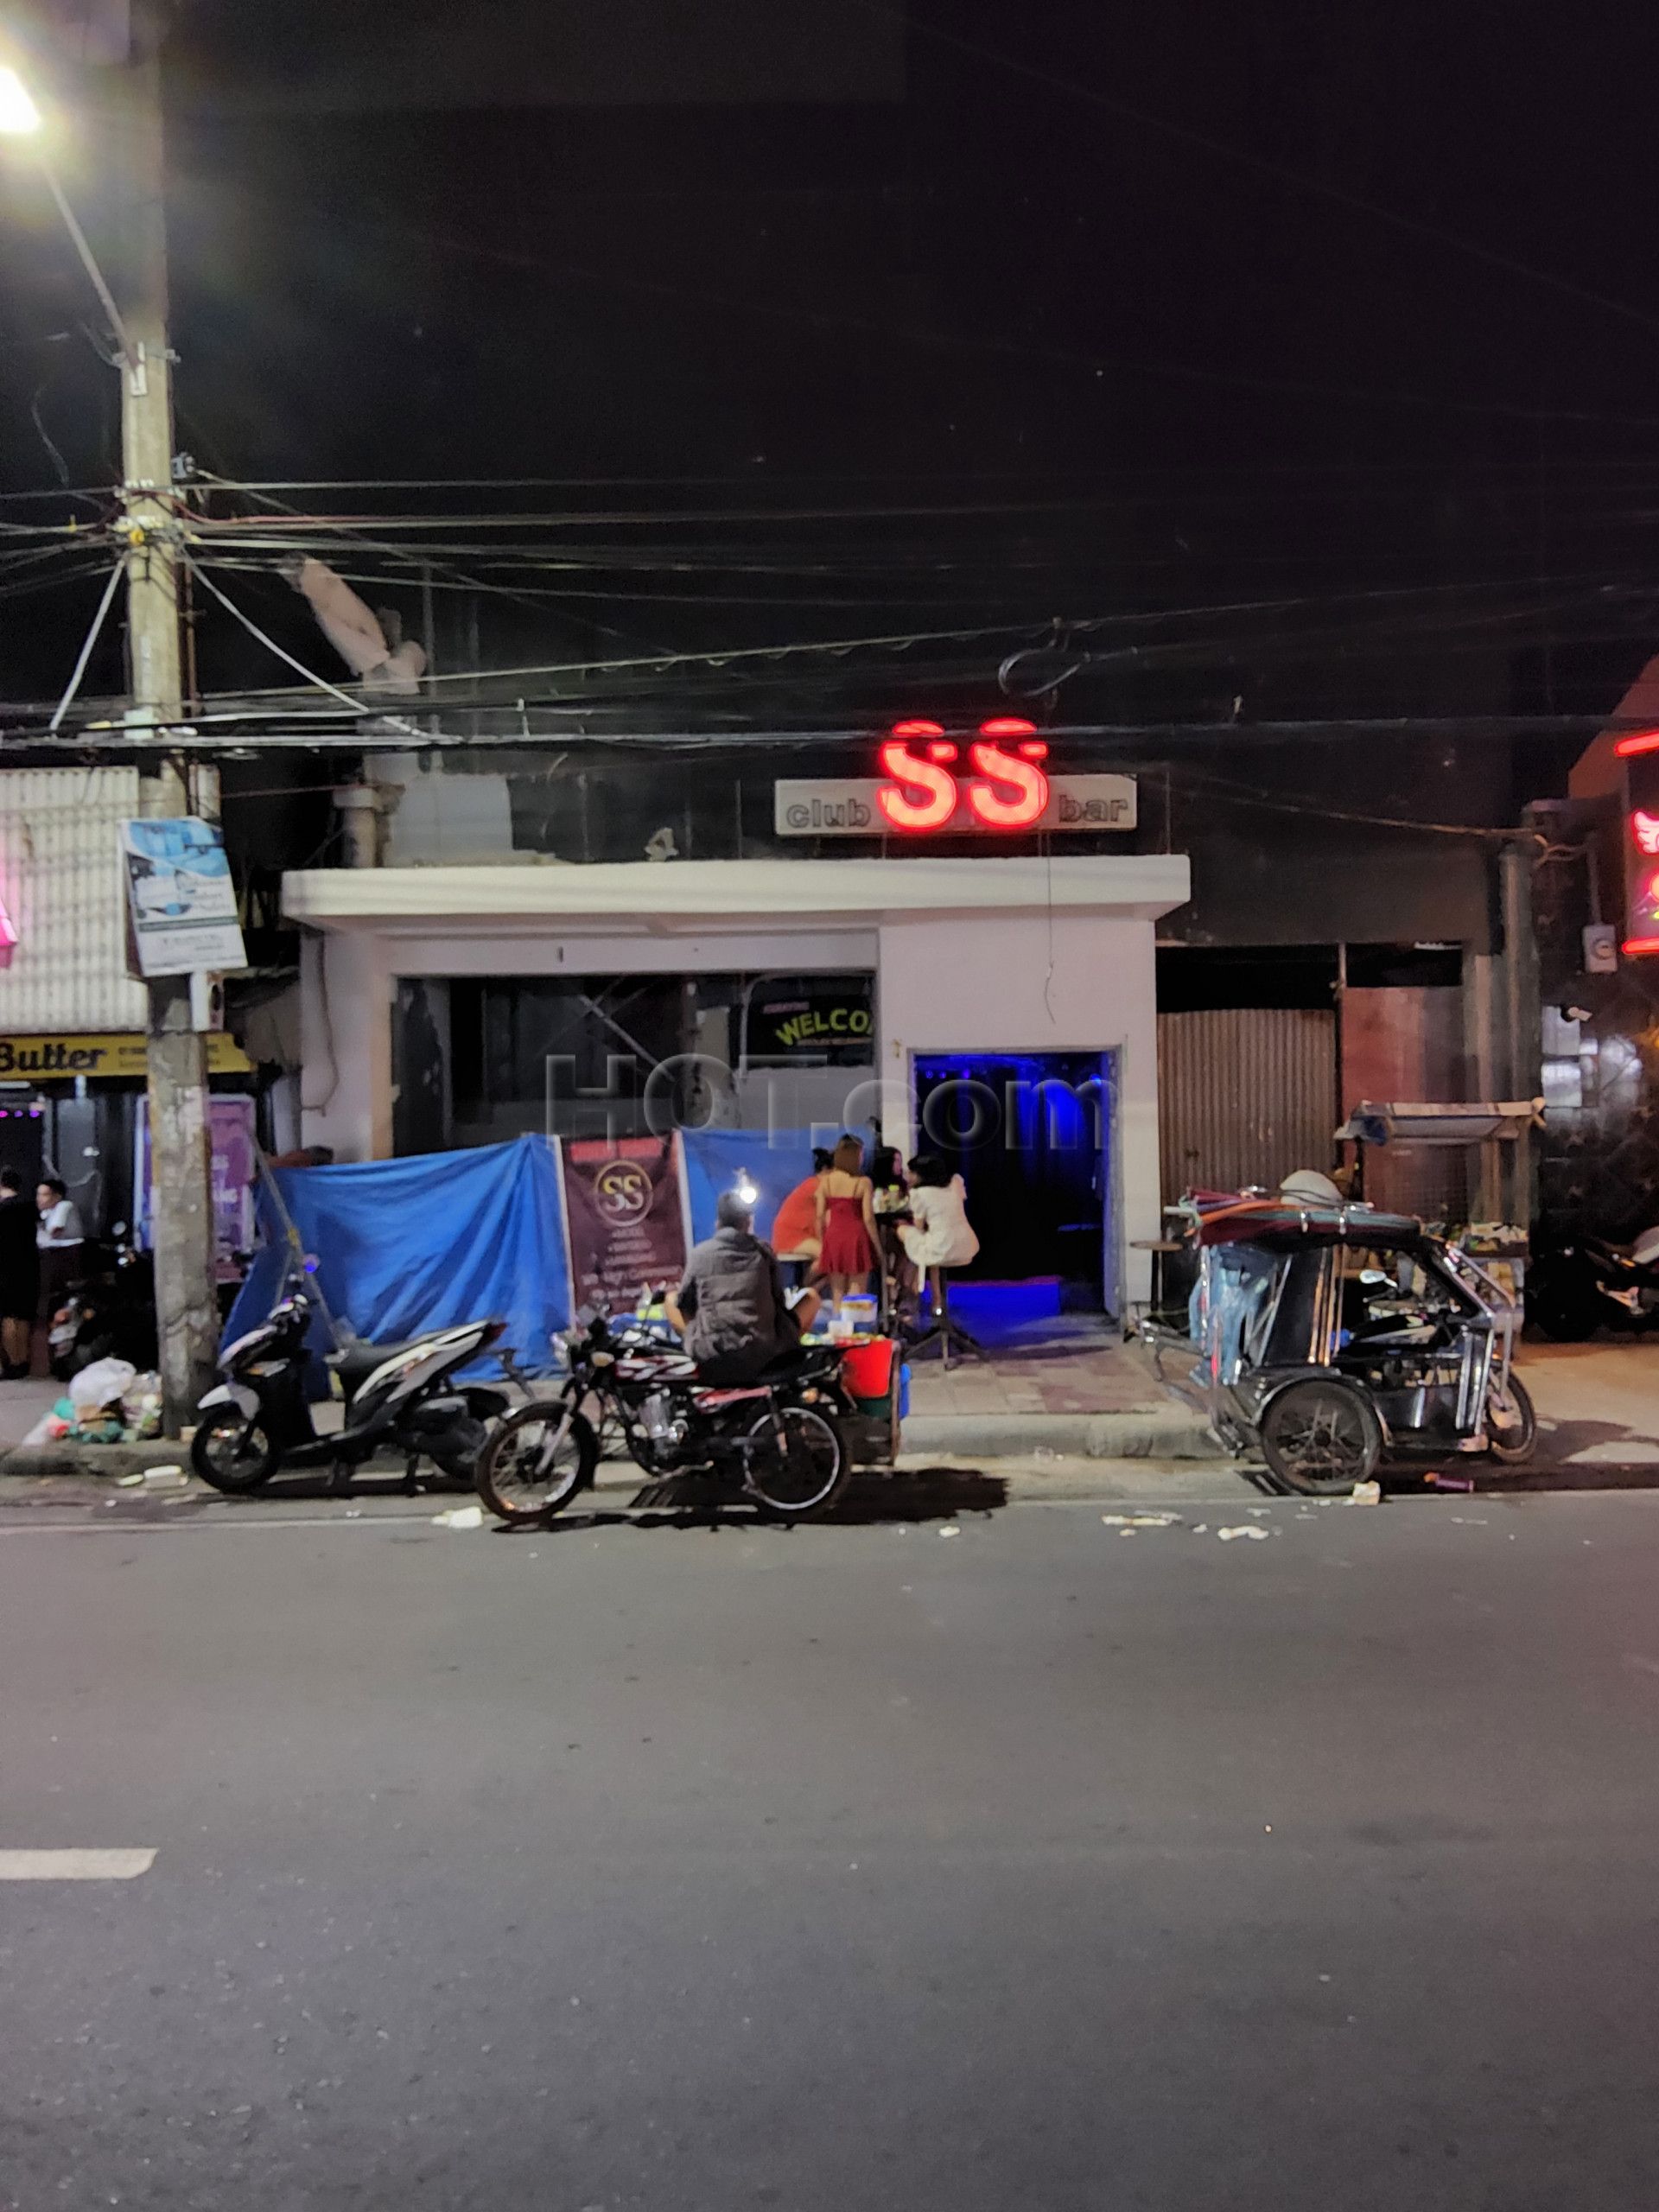 Angeles City, Philippines Club Ss Bar